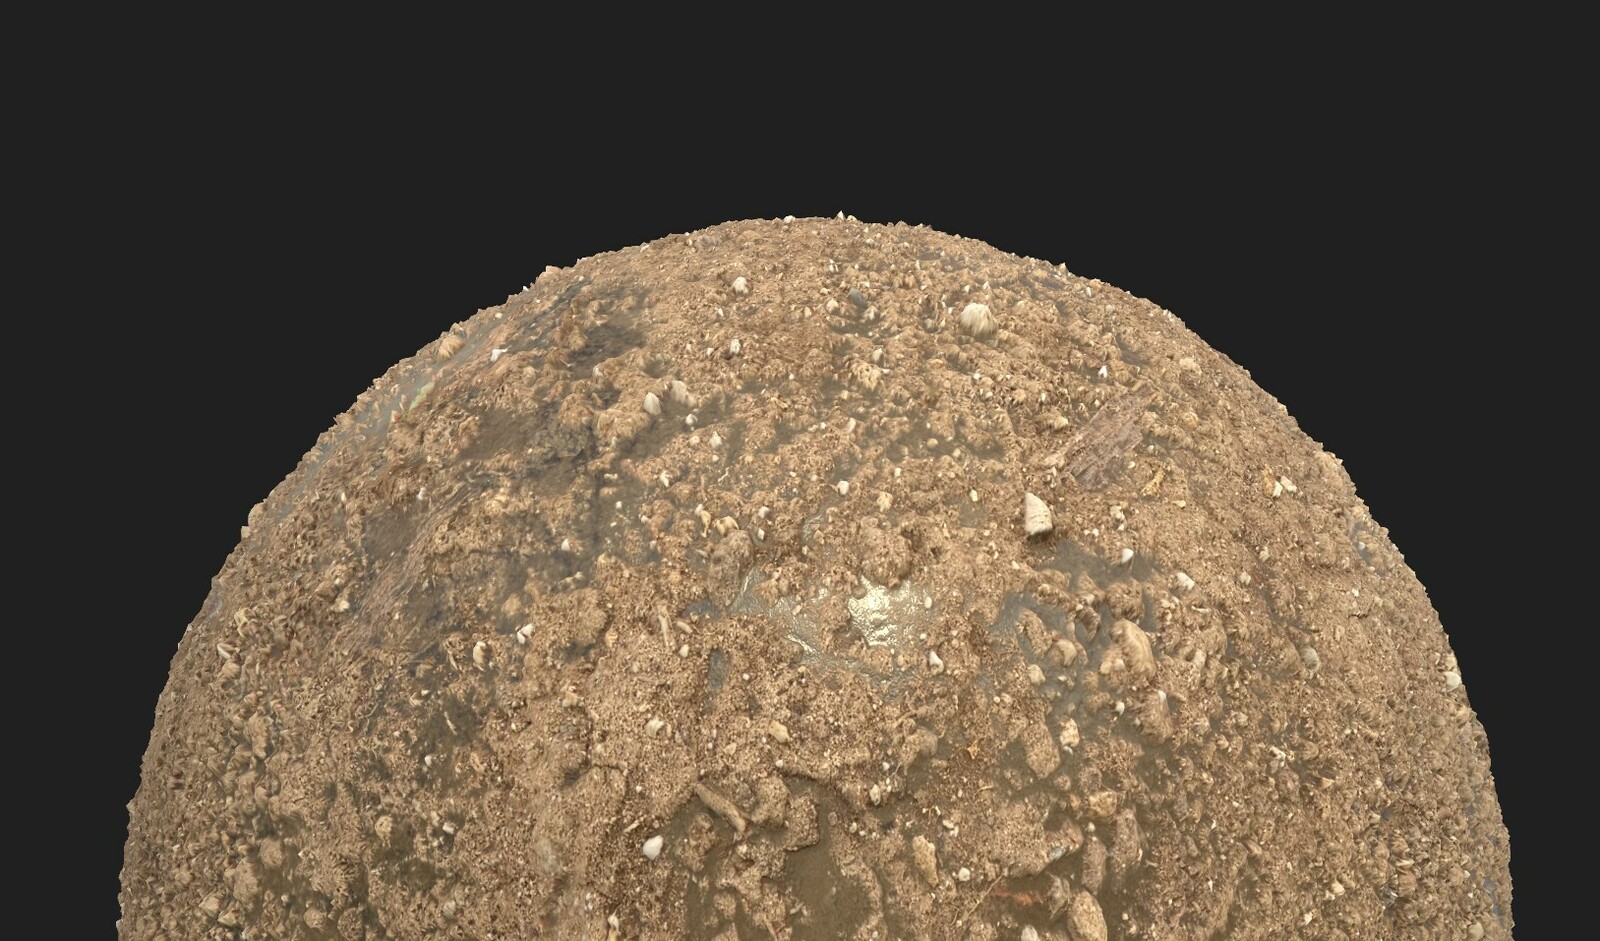 Soil, captured with iPhone 11, material in Substance Alchemist/Designer